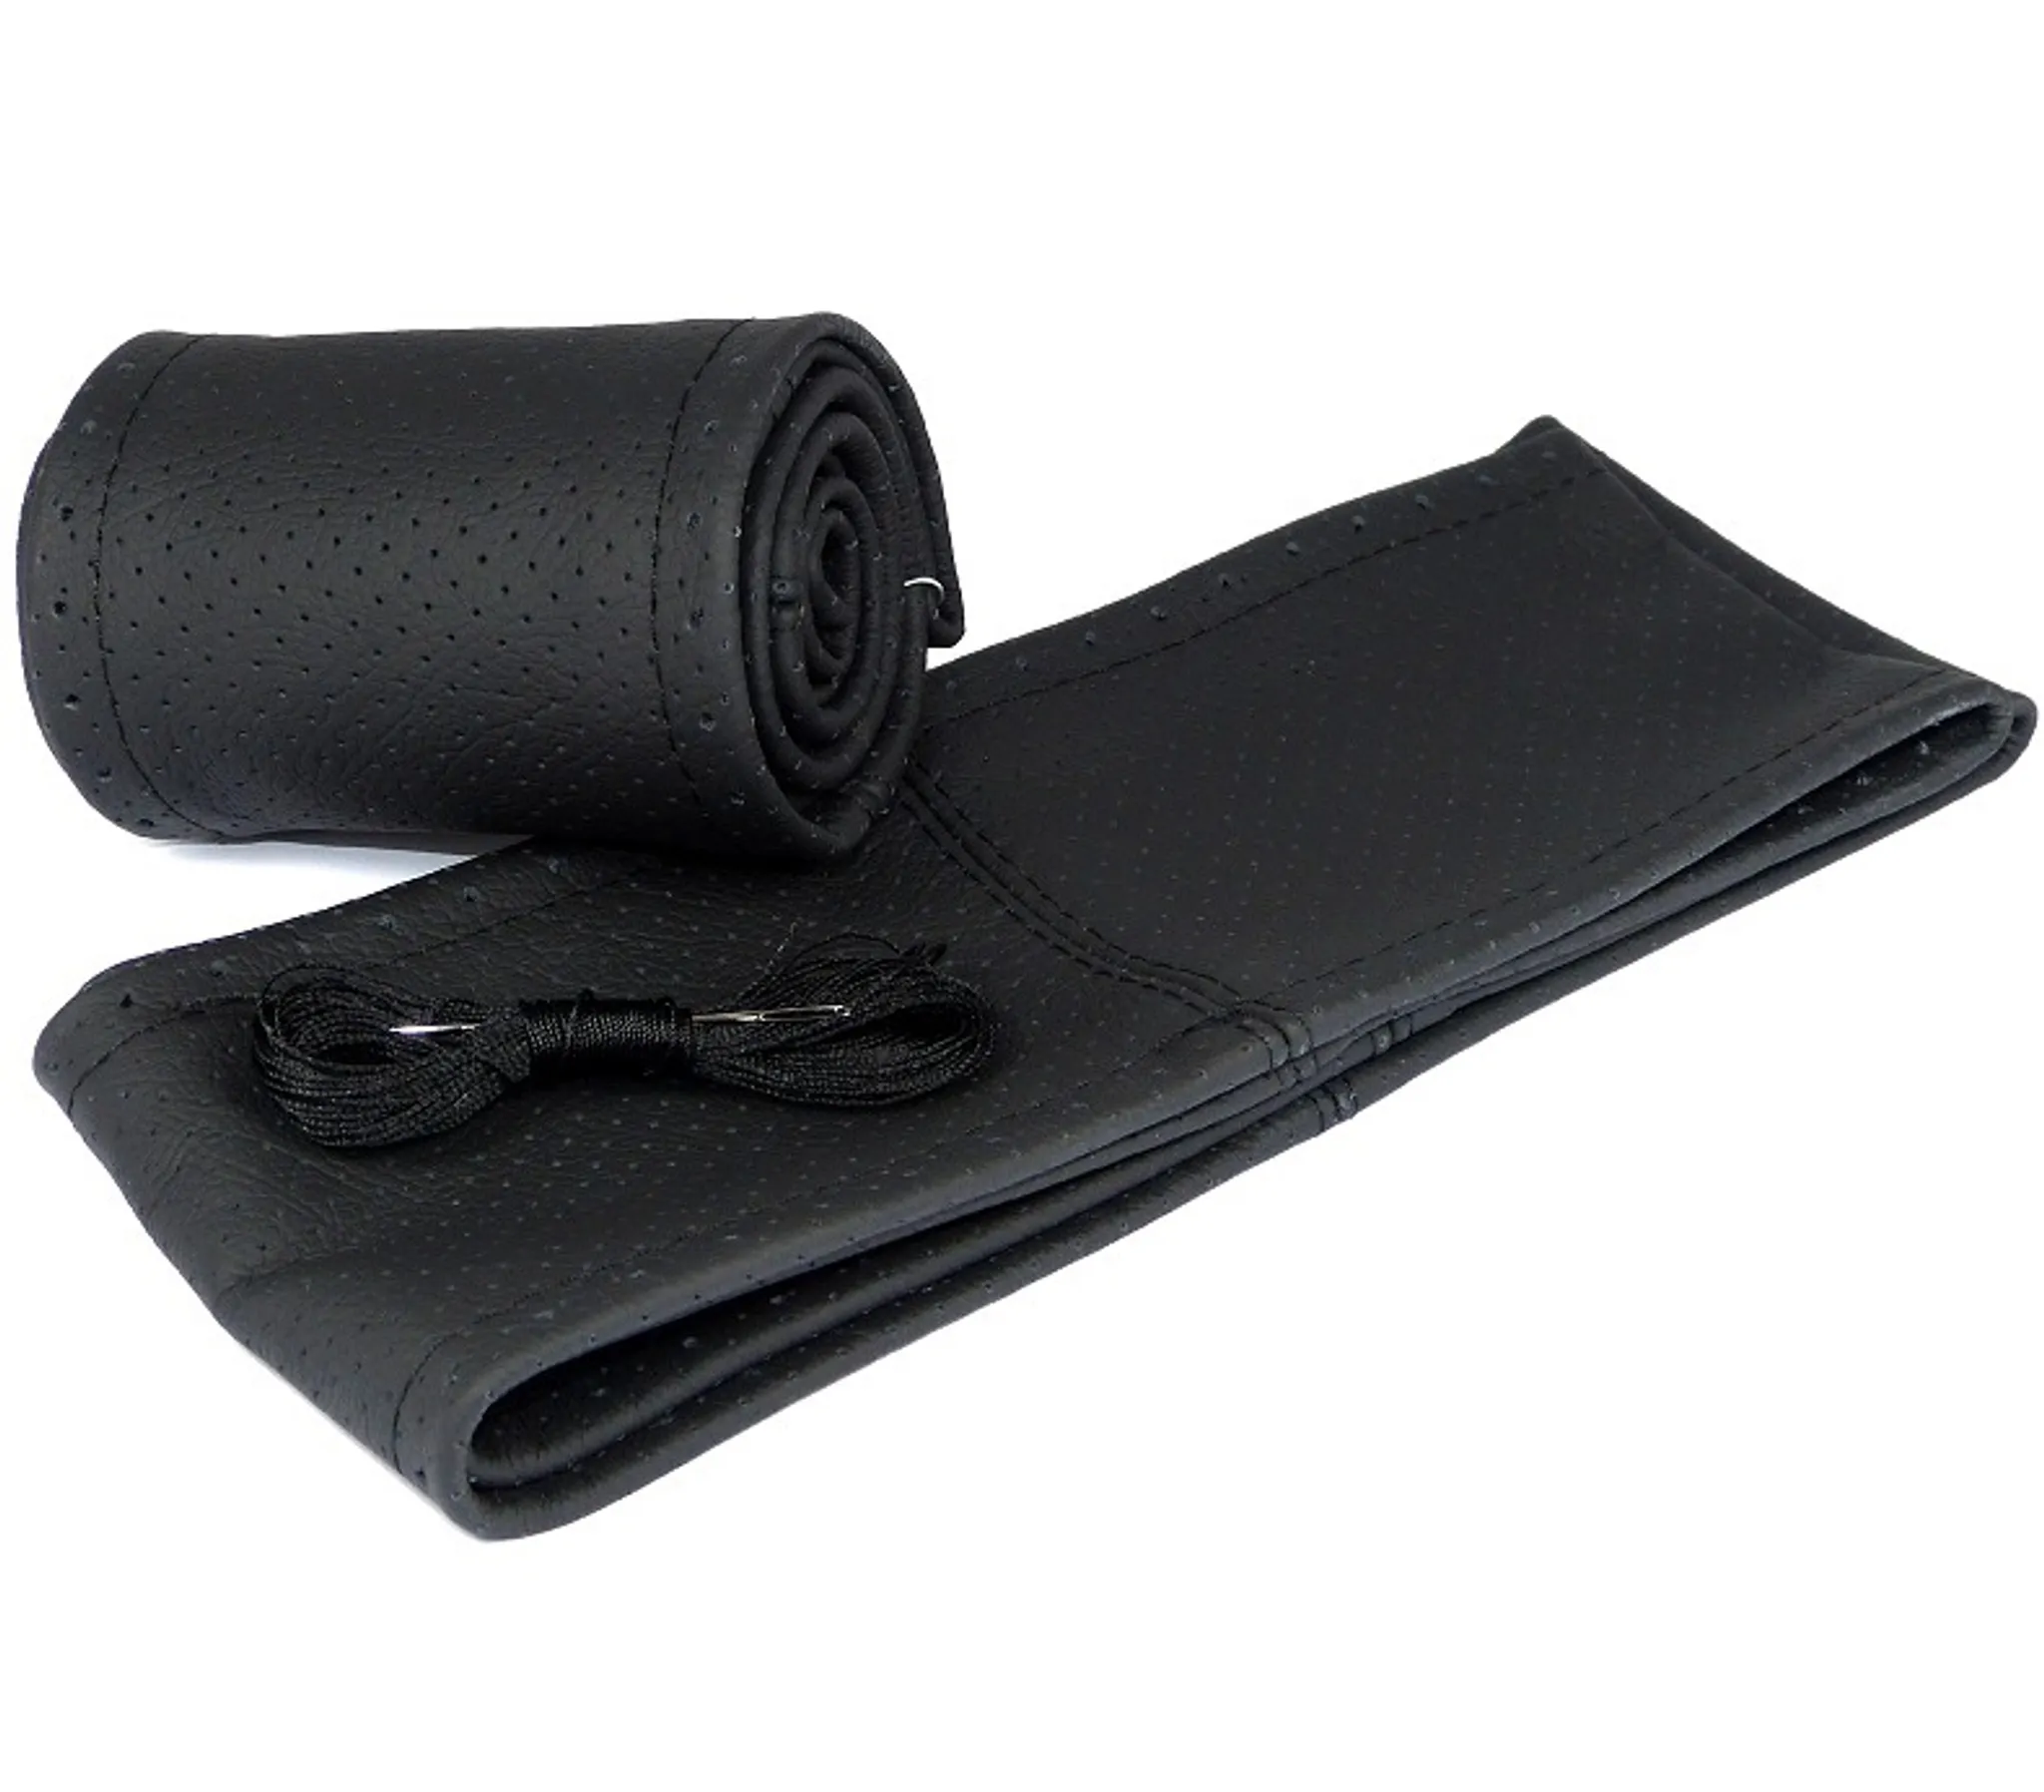 Auto-Lenkradbezug aus echtem Leder, handgenäht, für Lenkradgröße 37–38 cm  (schwarz)